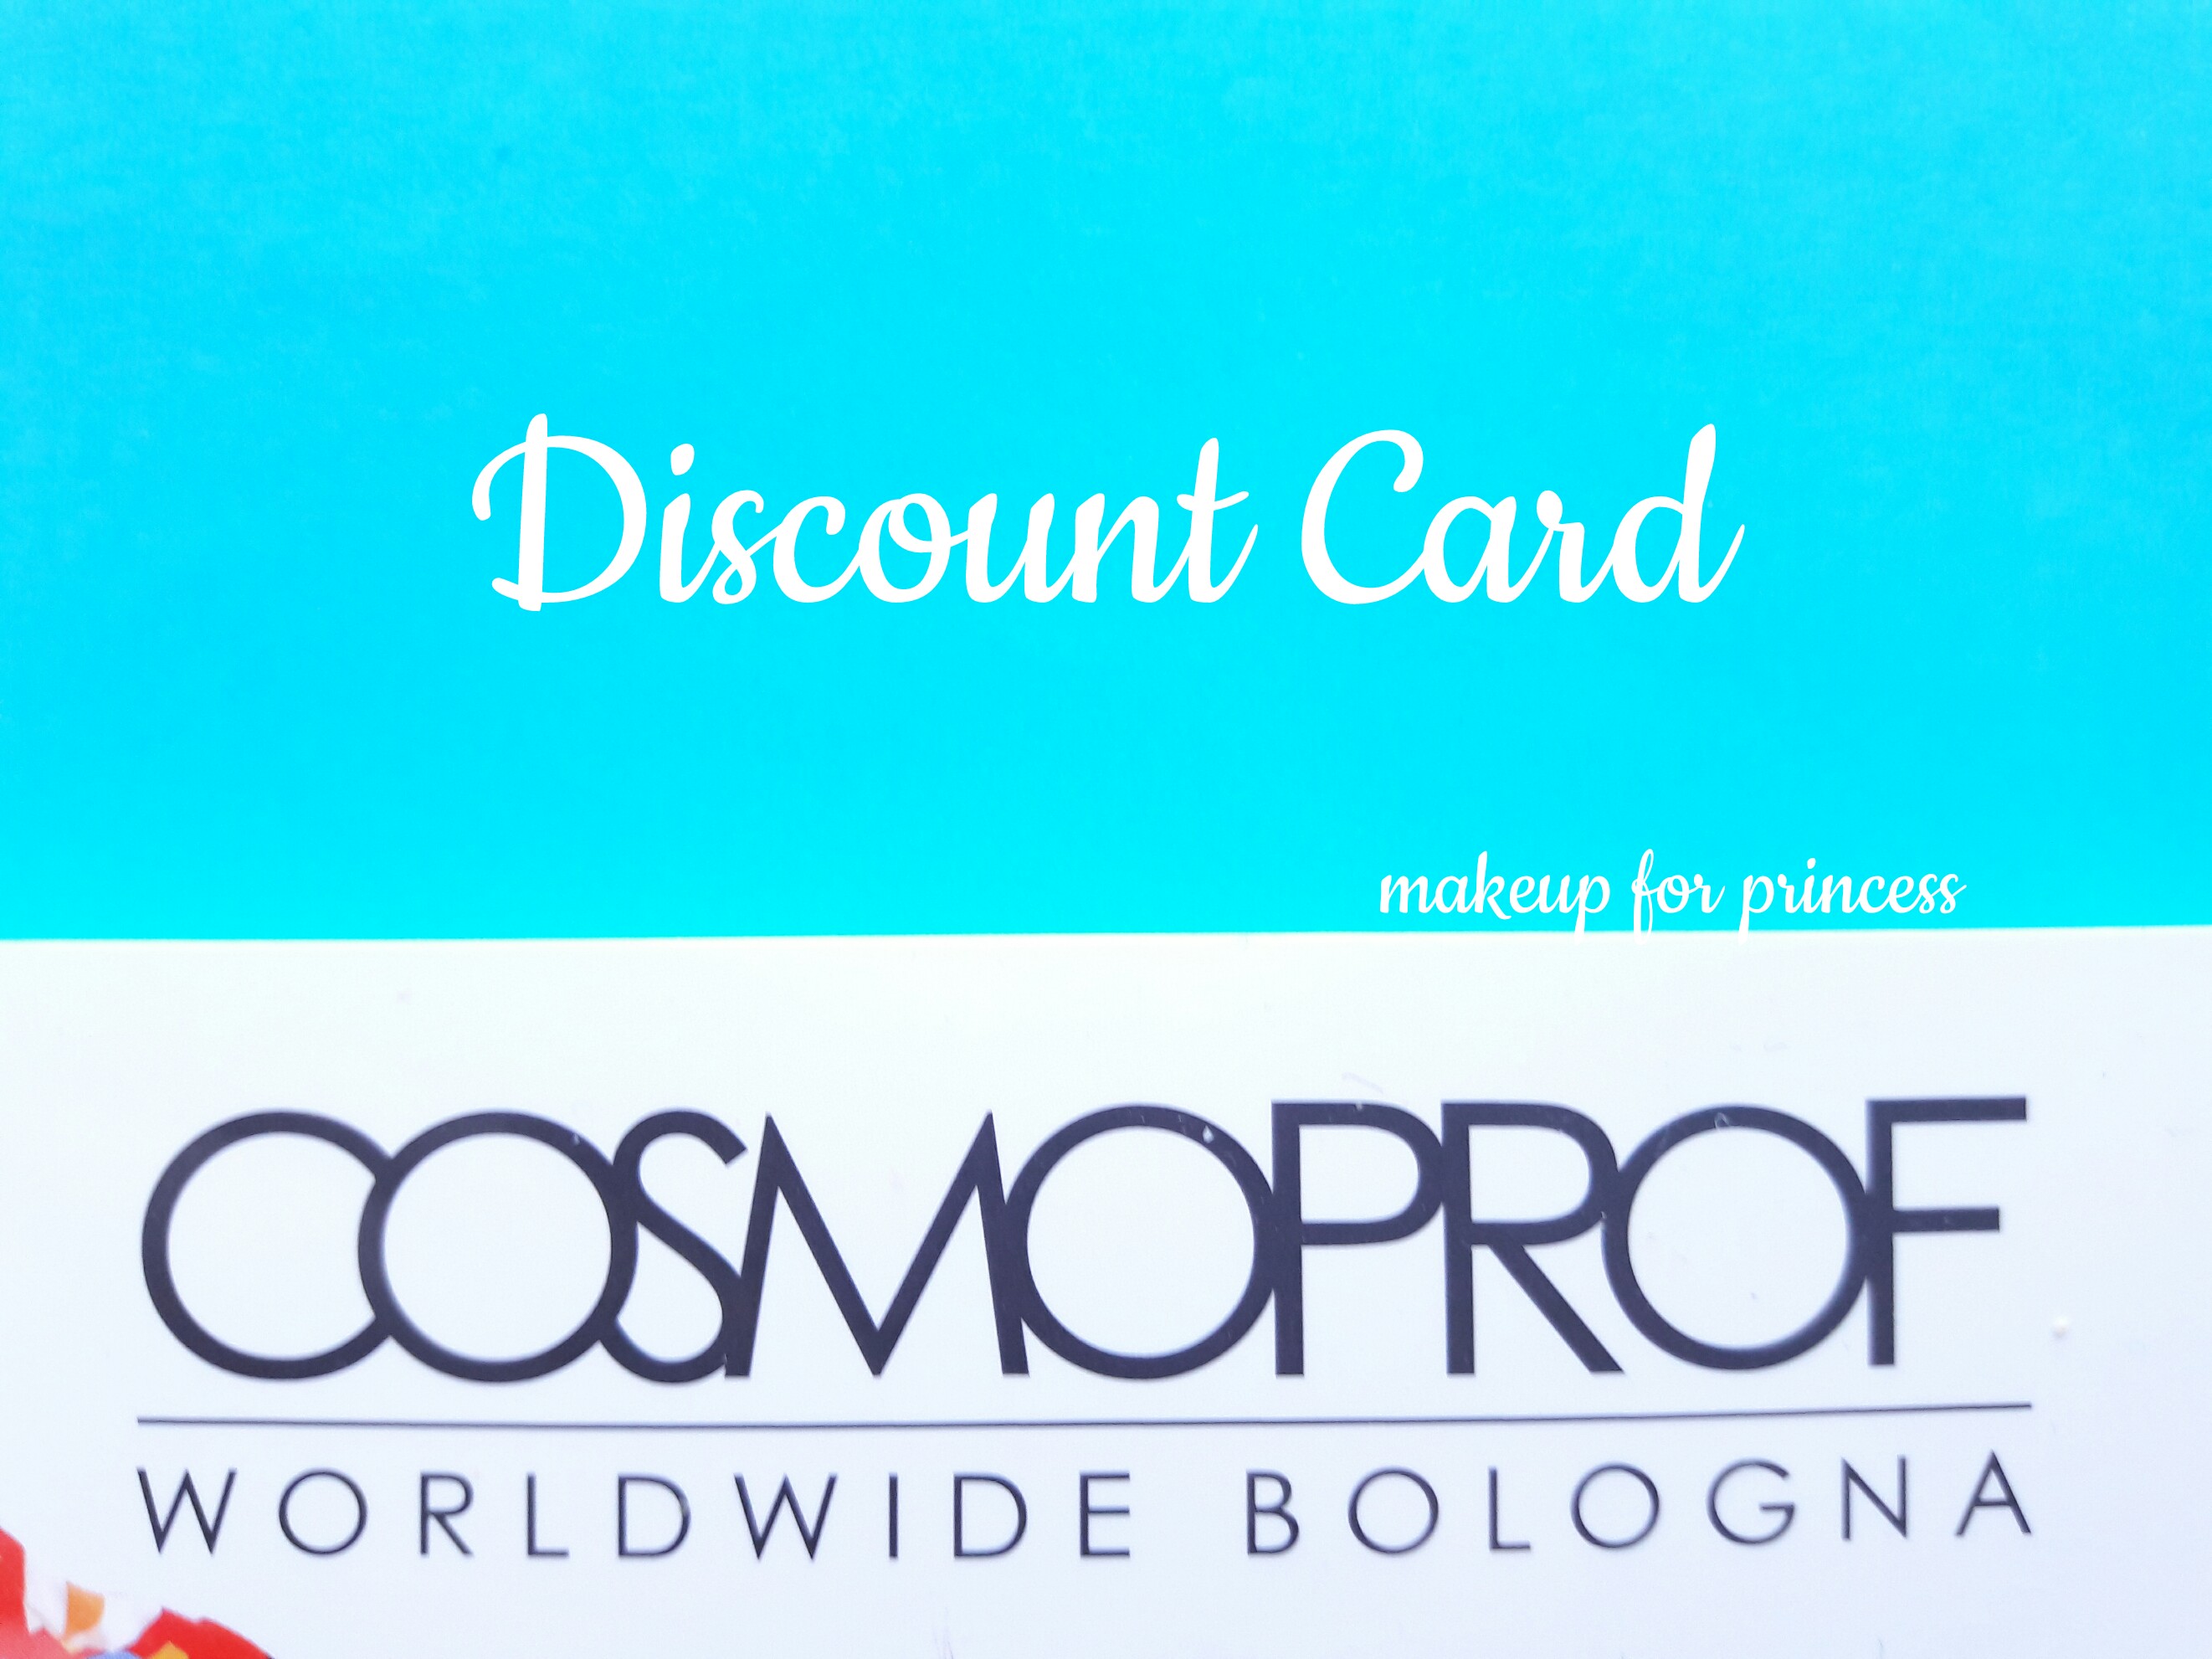 Discount Card Cosmoprof 2017 come richiederla! Makeup for Princess